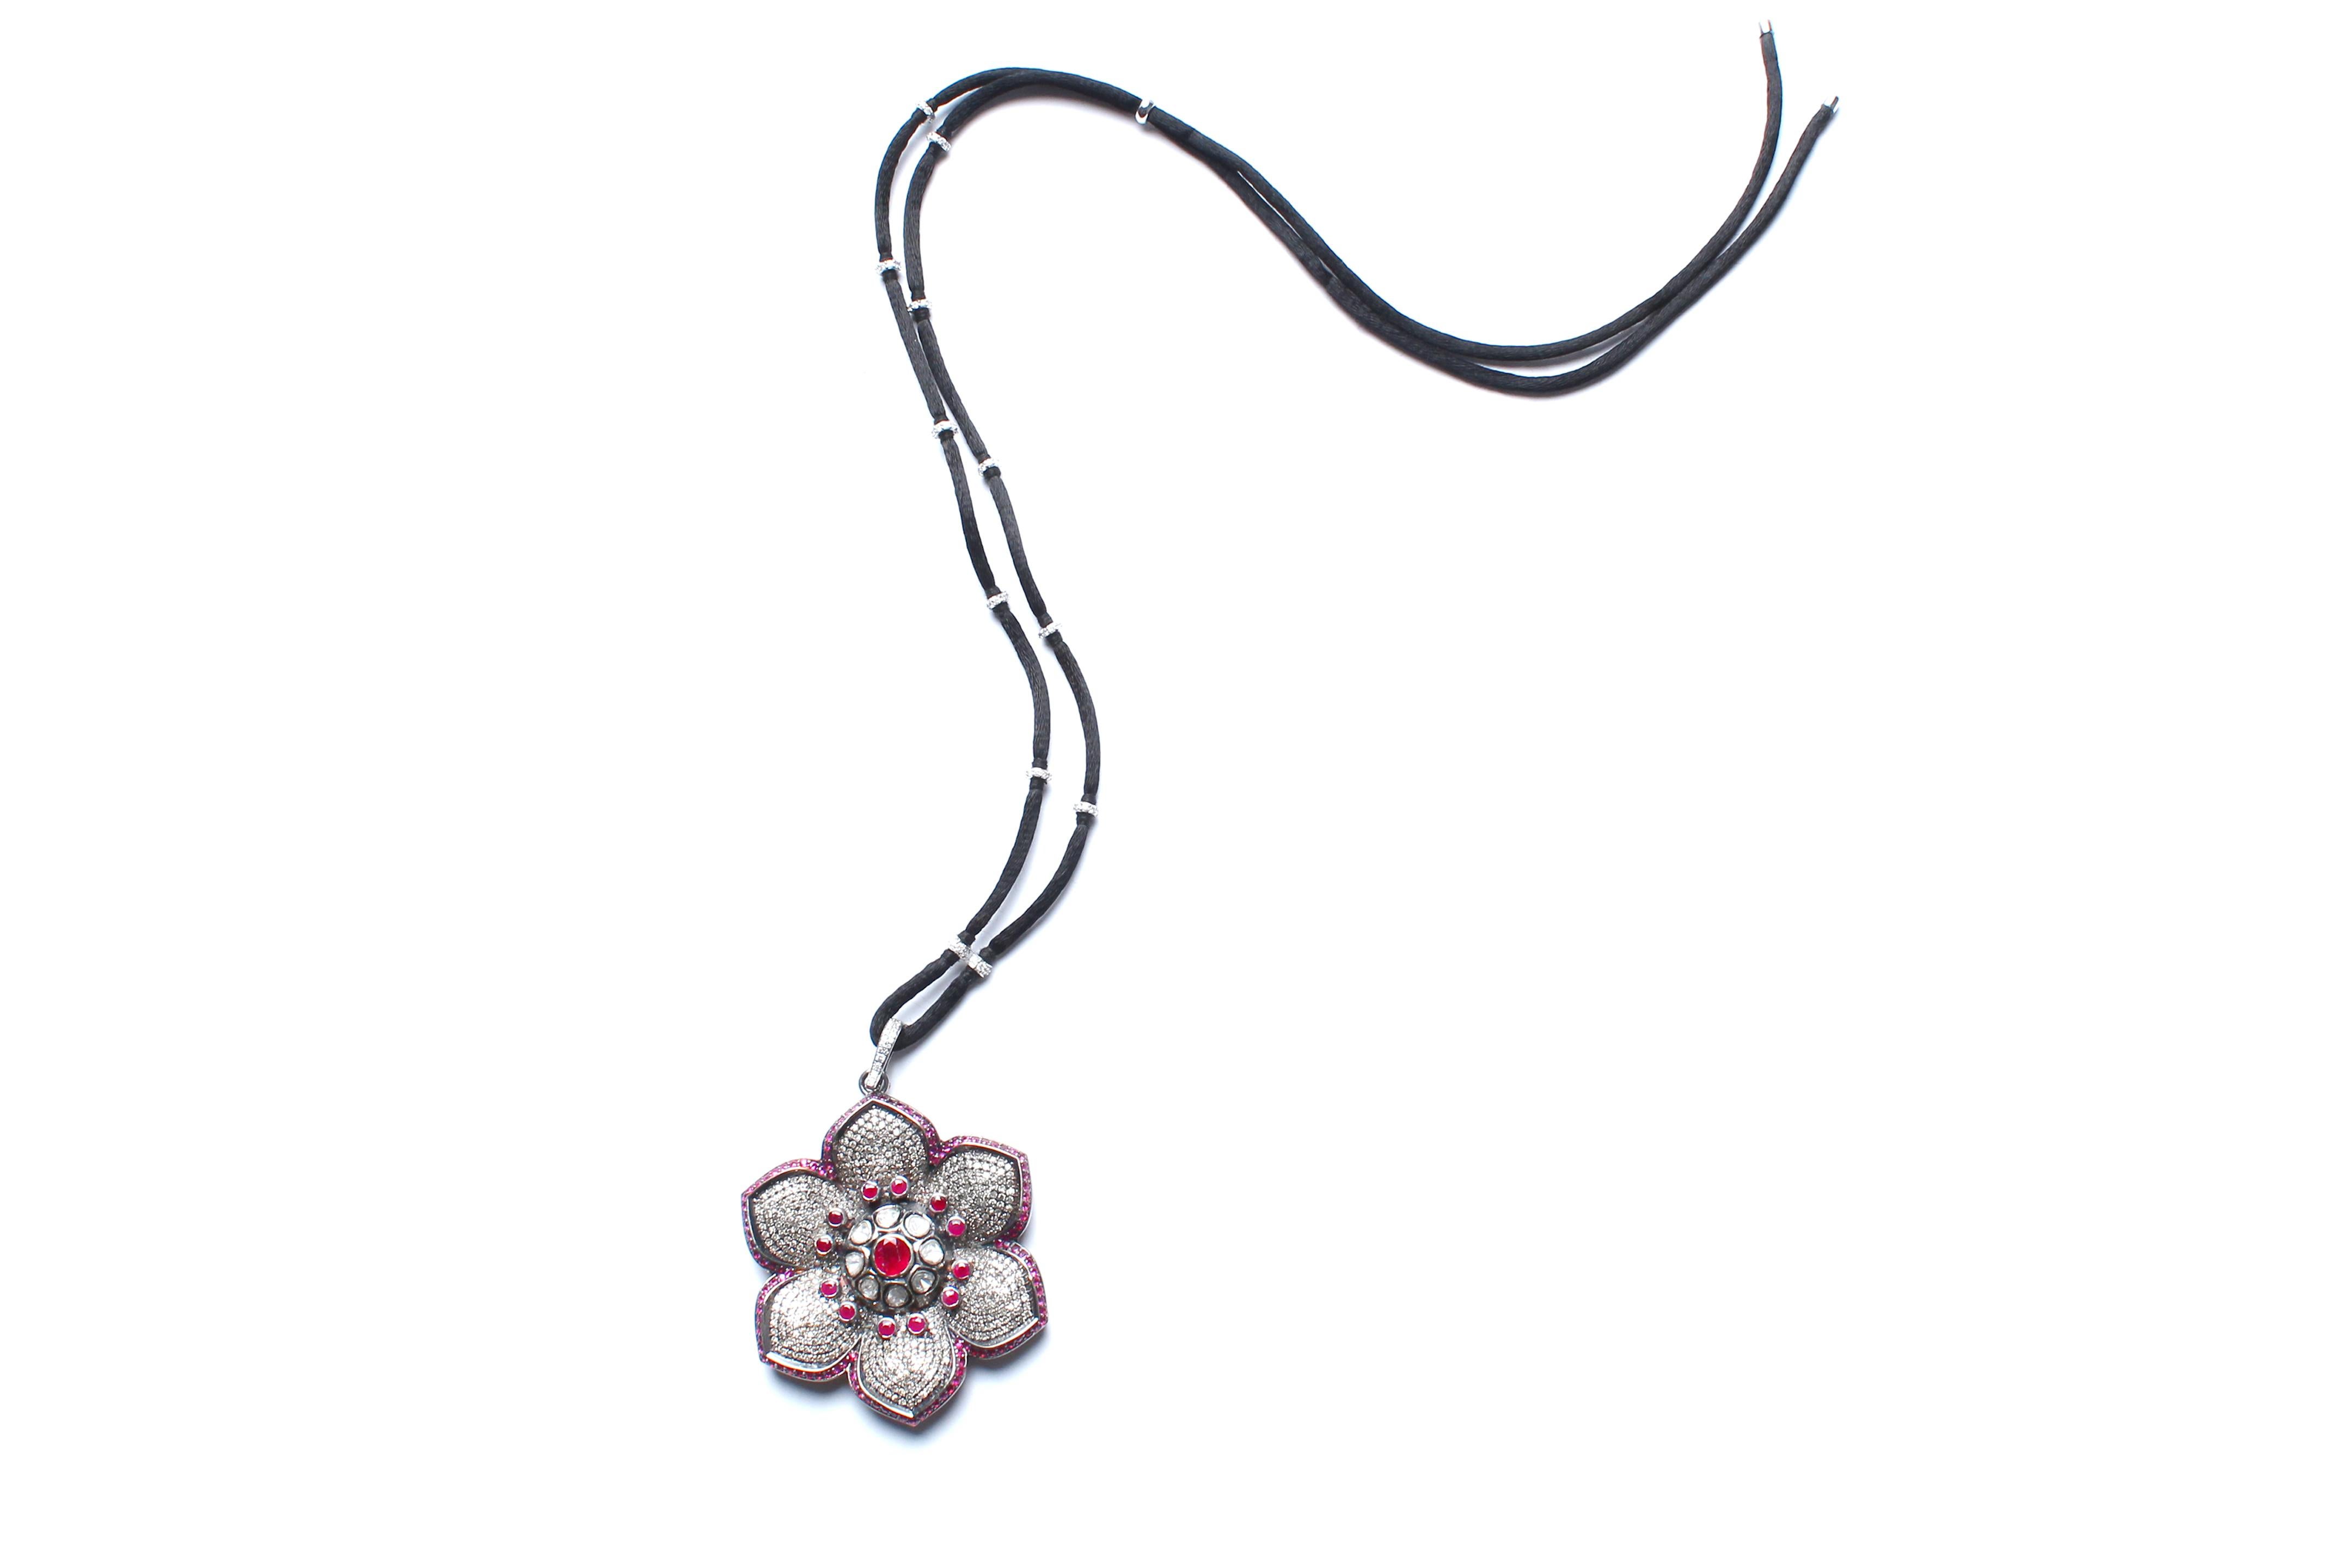 Contemporary Clarissa Bronfman Rose Cut Diamond, Ruby, Flower Pendant on Suede Diamond Cord